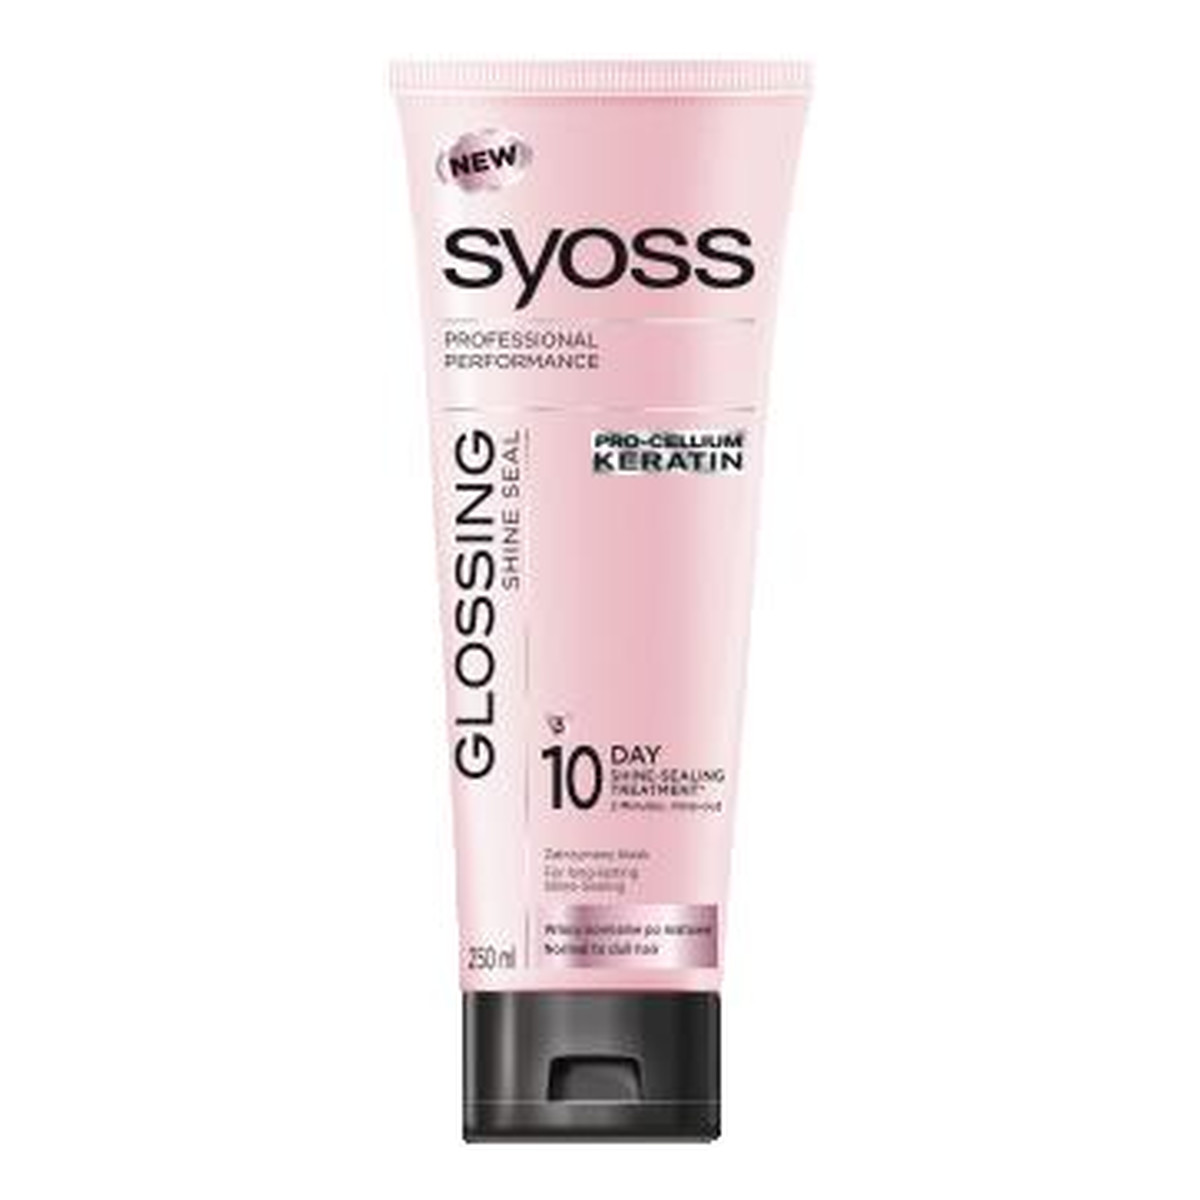 Syoss Glossing Shine Seal Professional Performance Maska Do Włosów 250ml